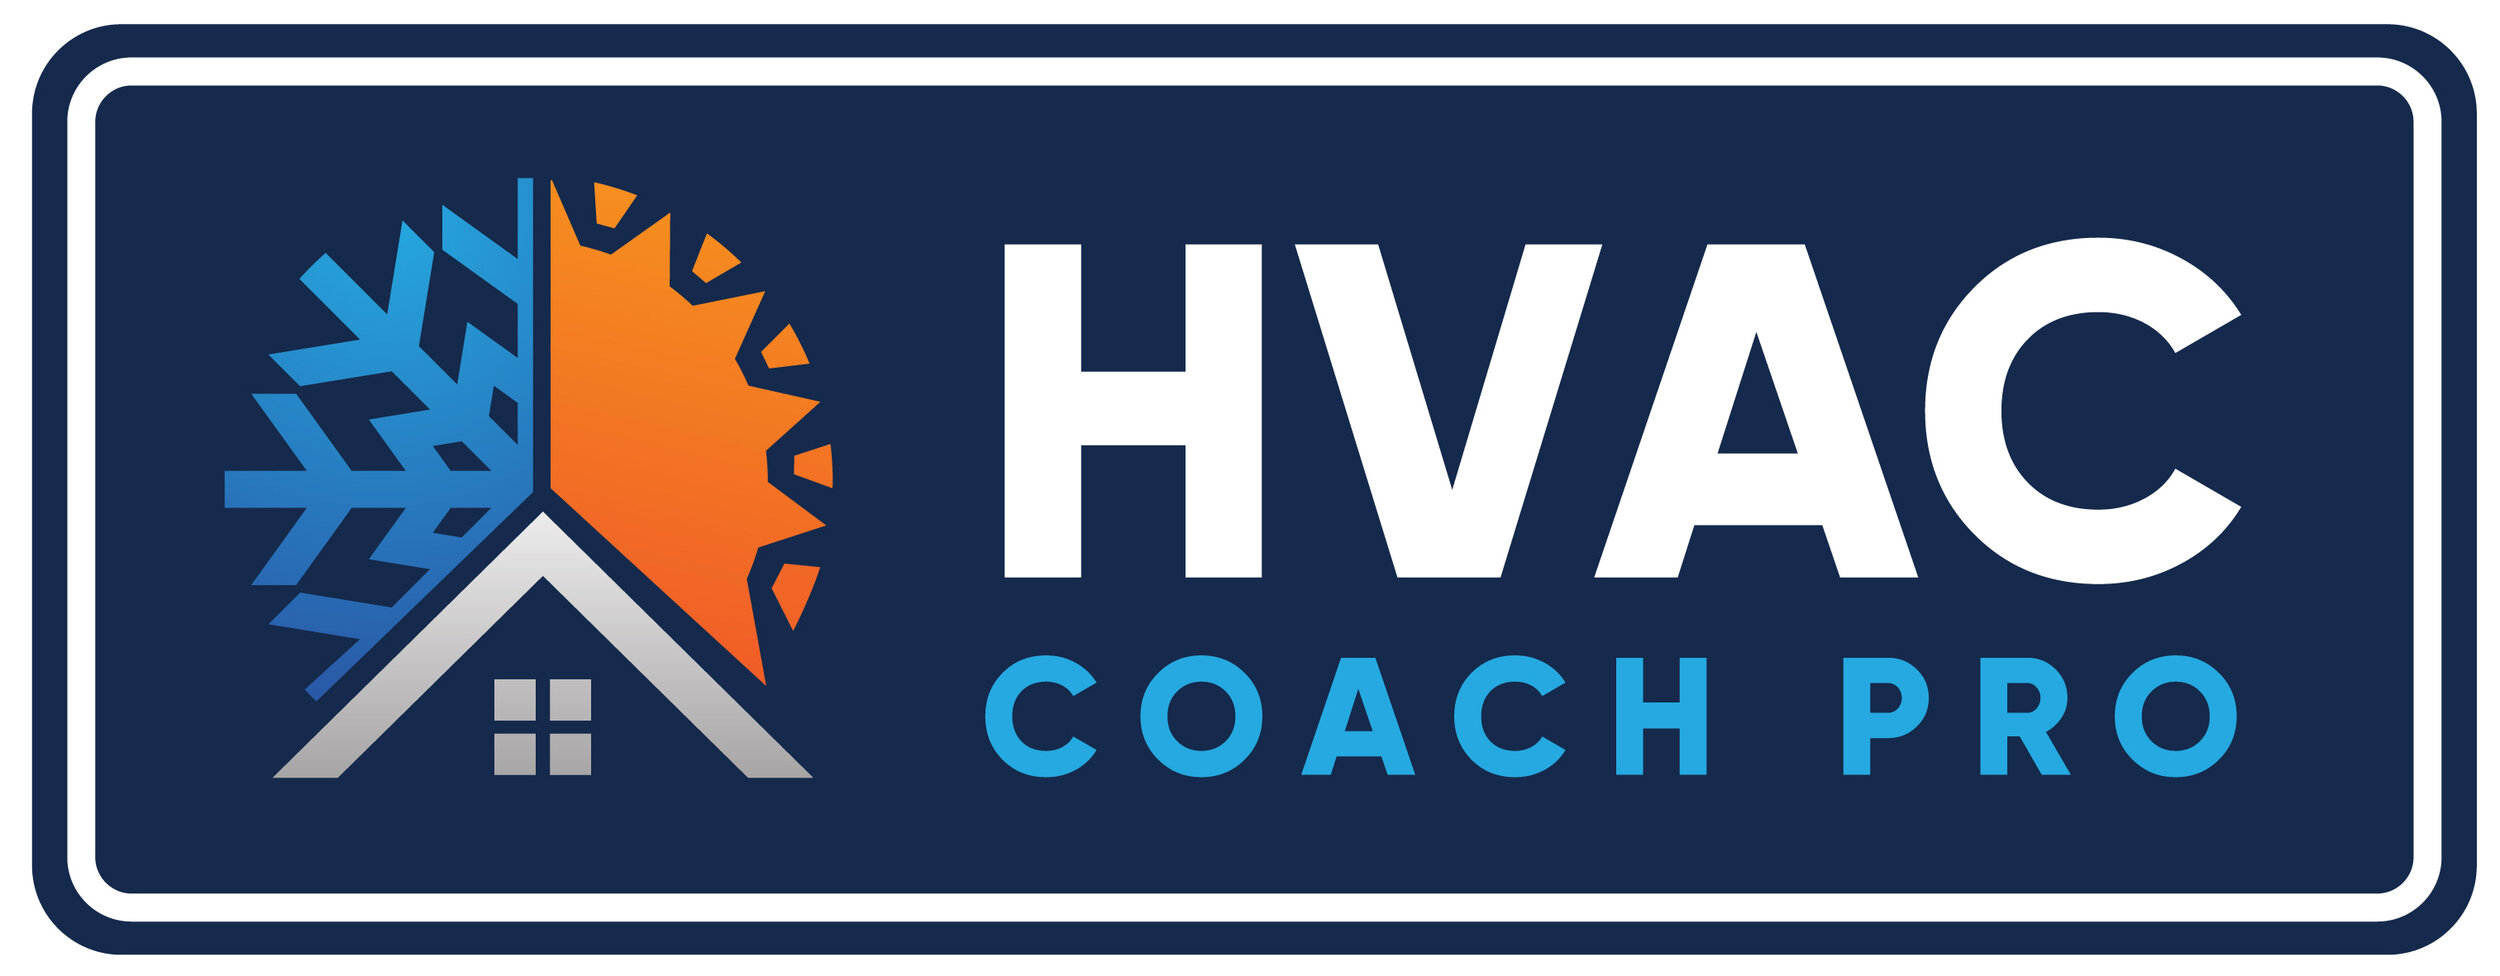 HVAC Coach Pro